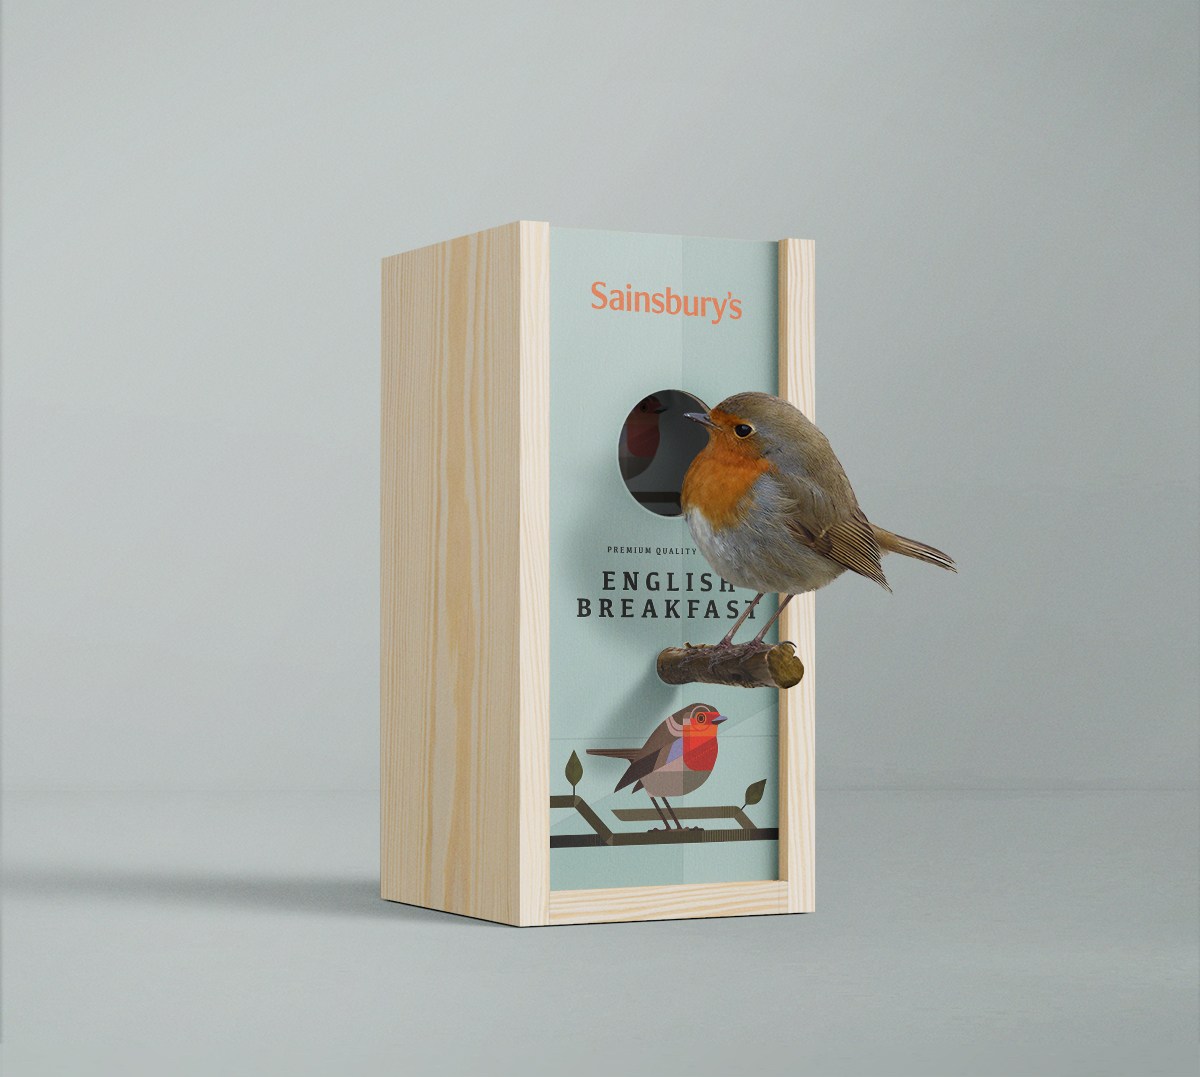 Sainsbury’s Tea Packaging Design